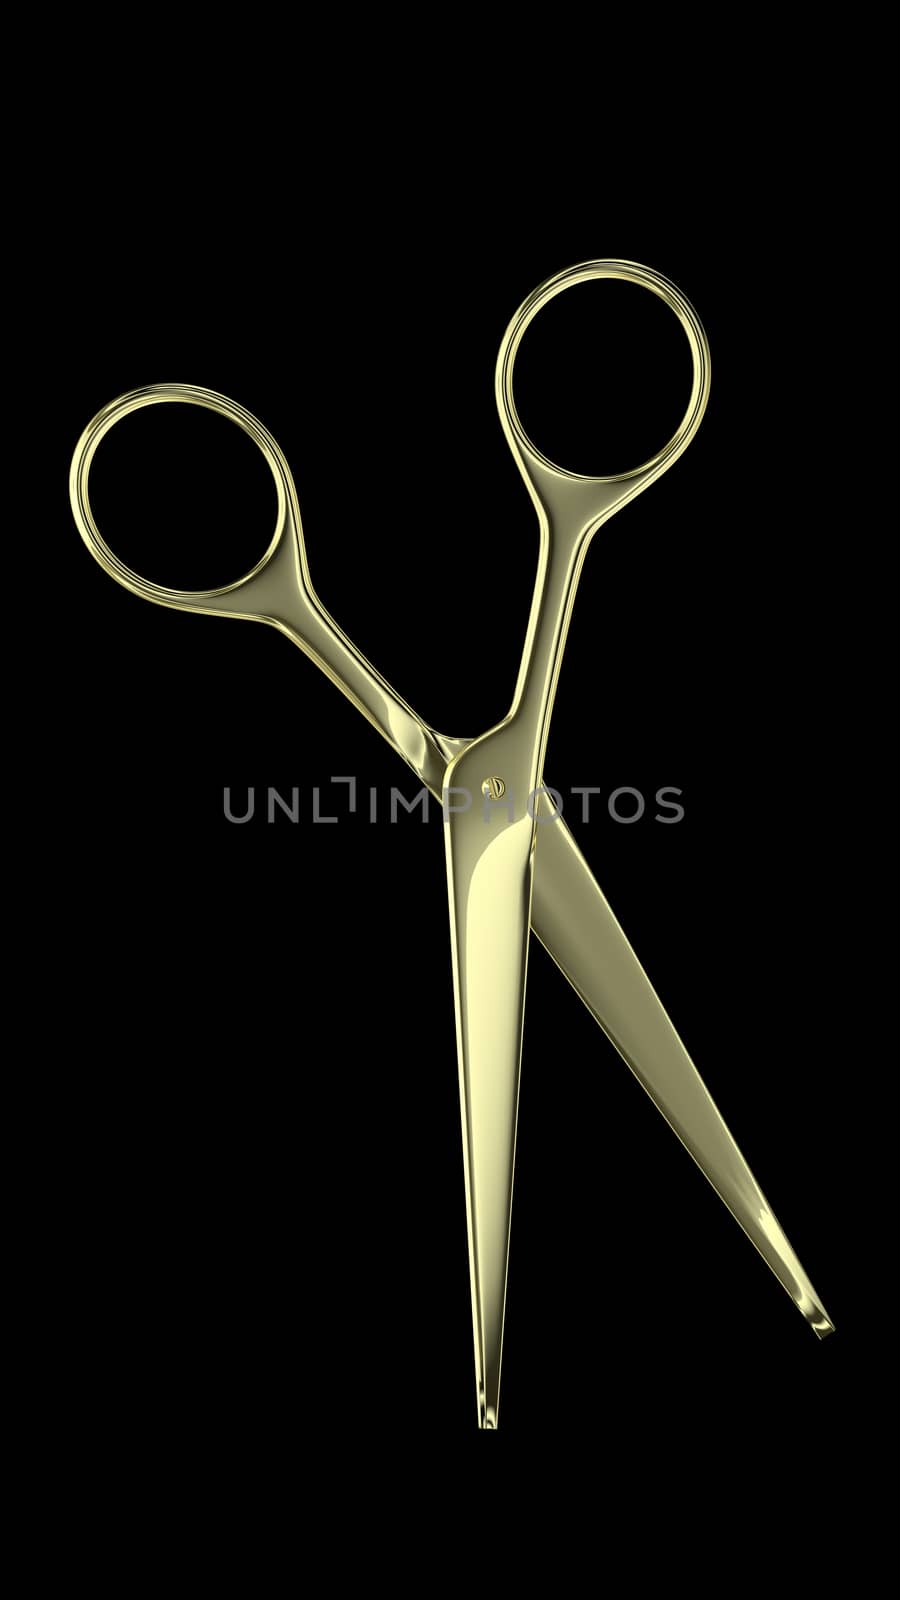 Golden scissors. Black background by ytjo